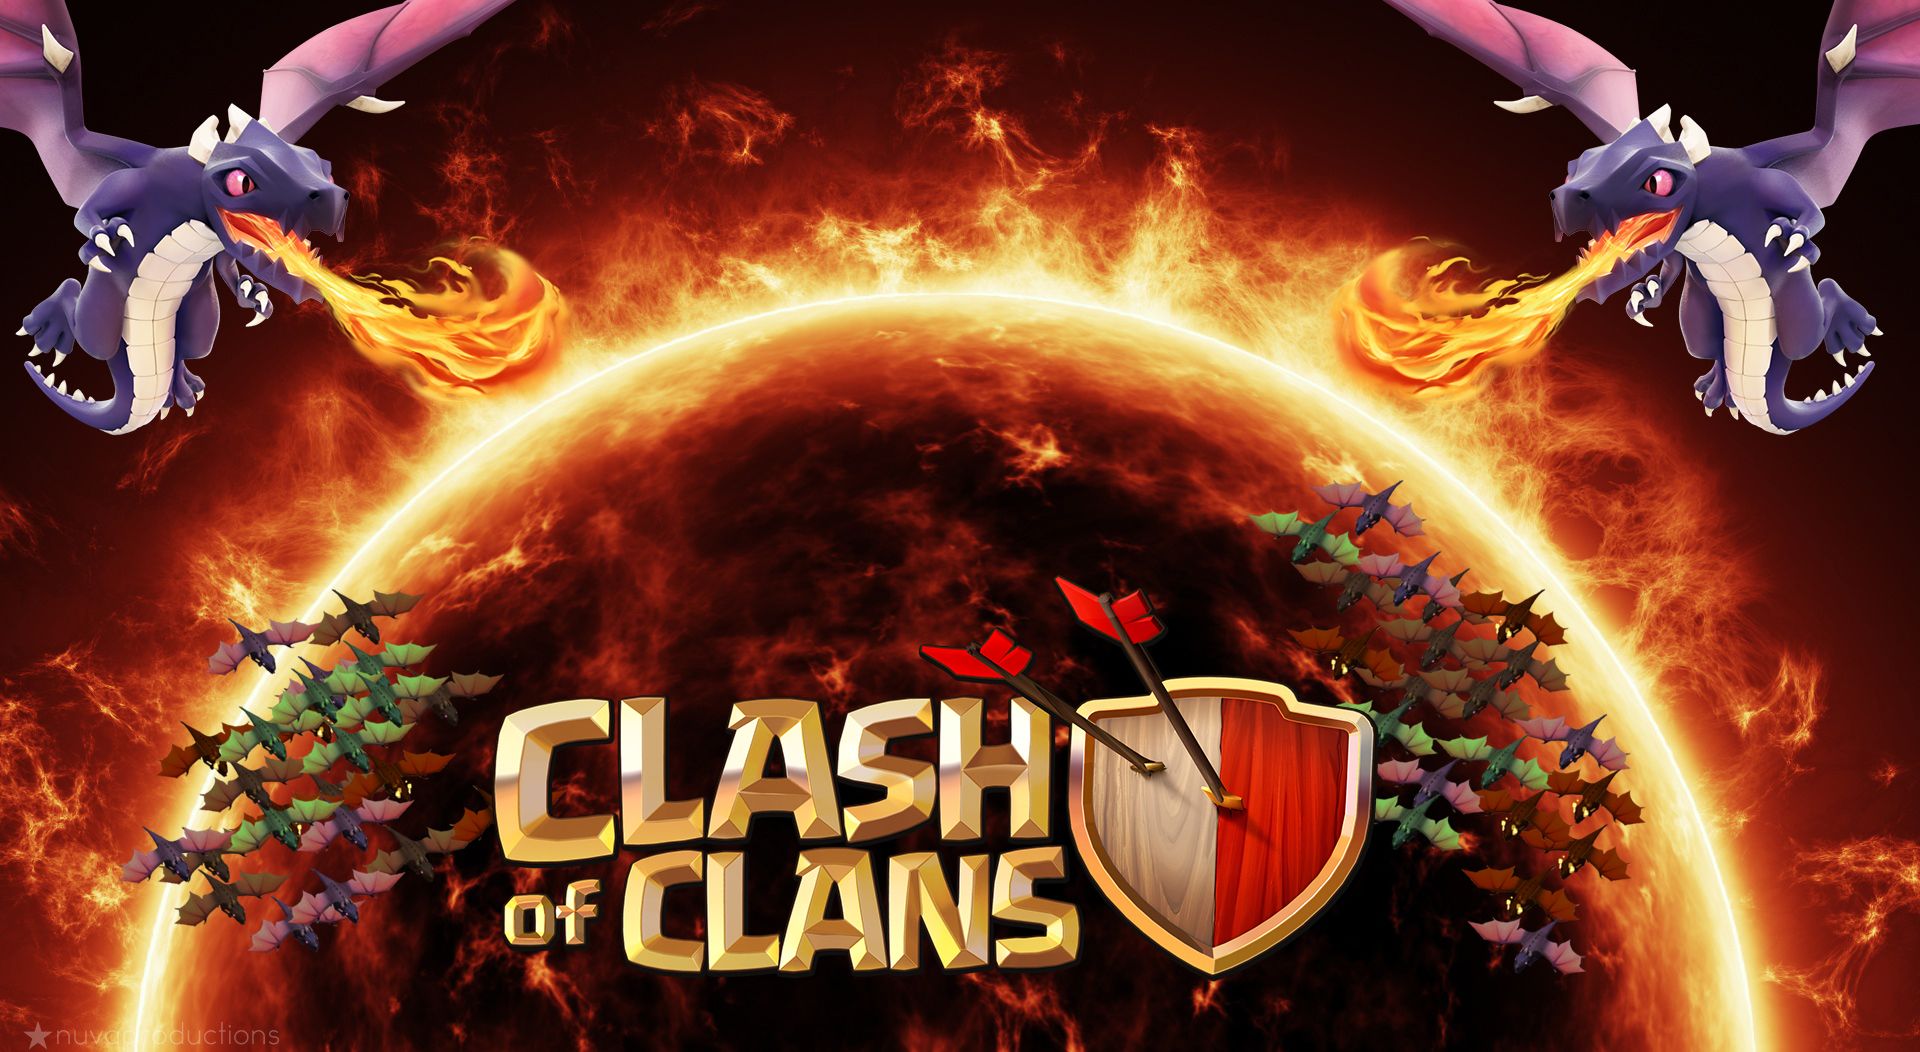 Clash of clans год. Clash of Clans картинки. Clash of Clans фон. Clash of Clans обои для рабочего стола. Clash of Clans дракон.